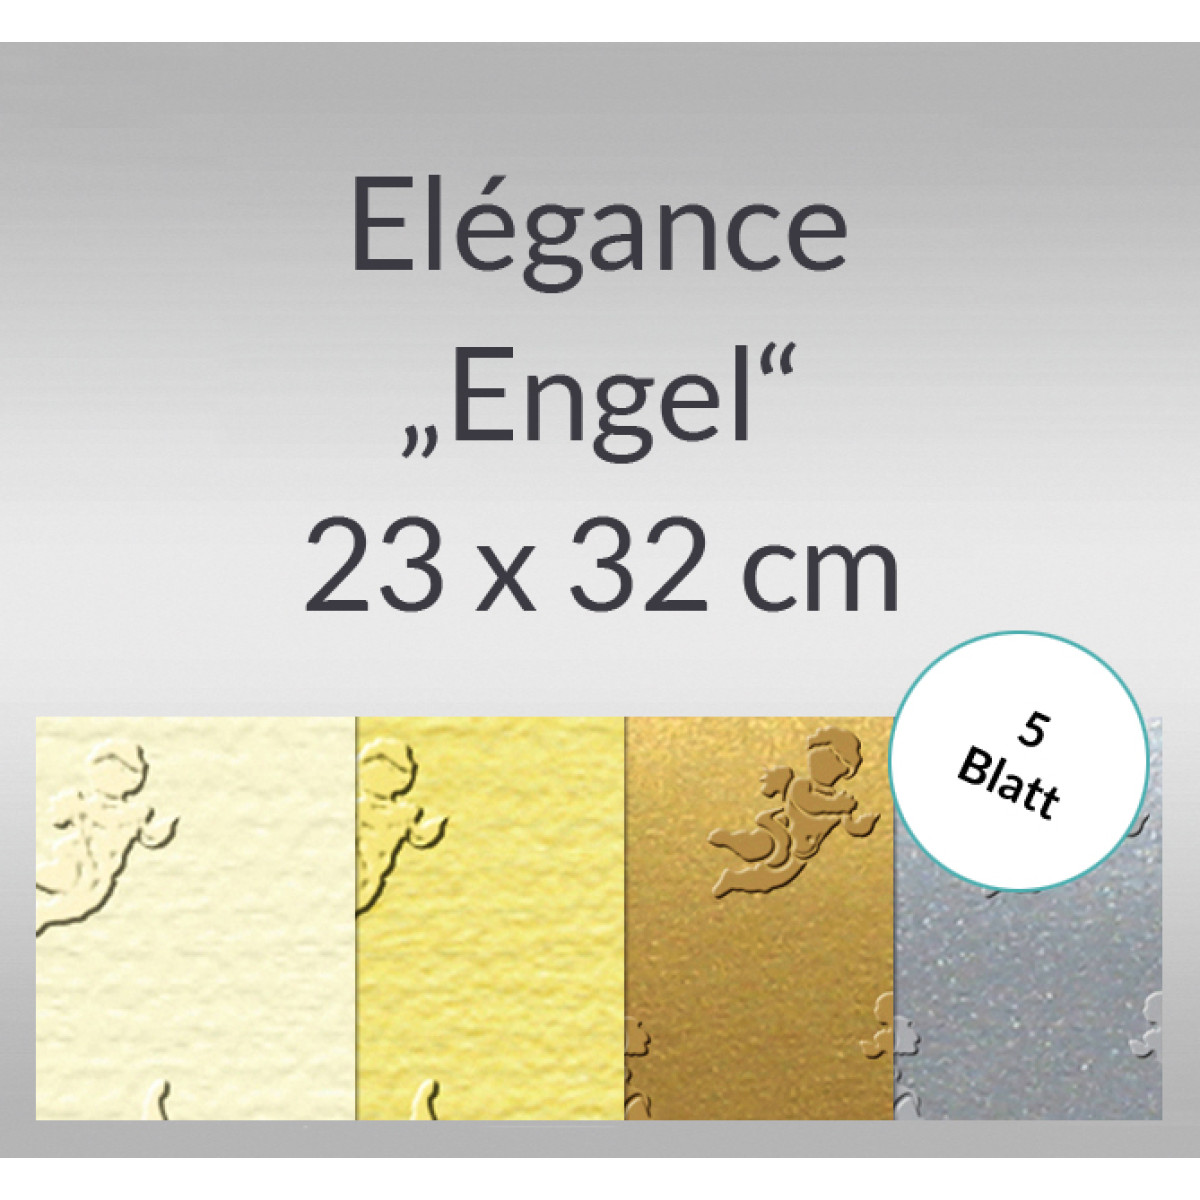 Elegance "Engel" 220 g/qm 23 x 32 cm - 5 Blatt